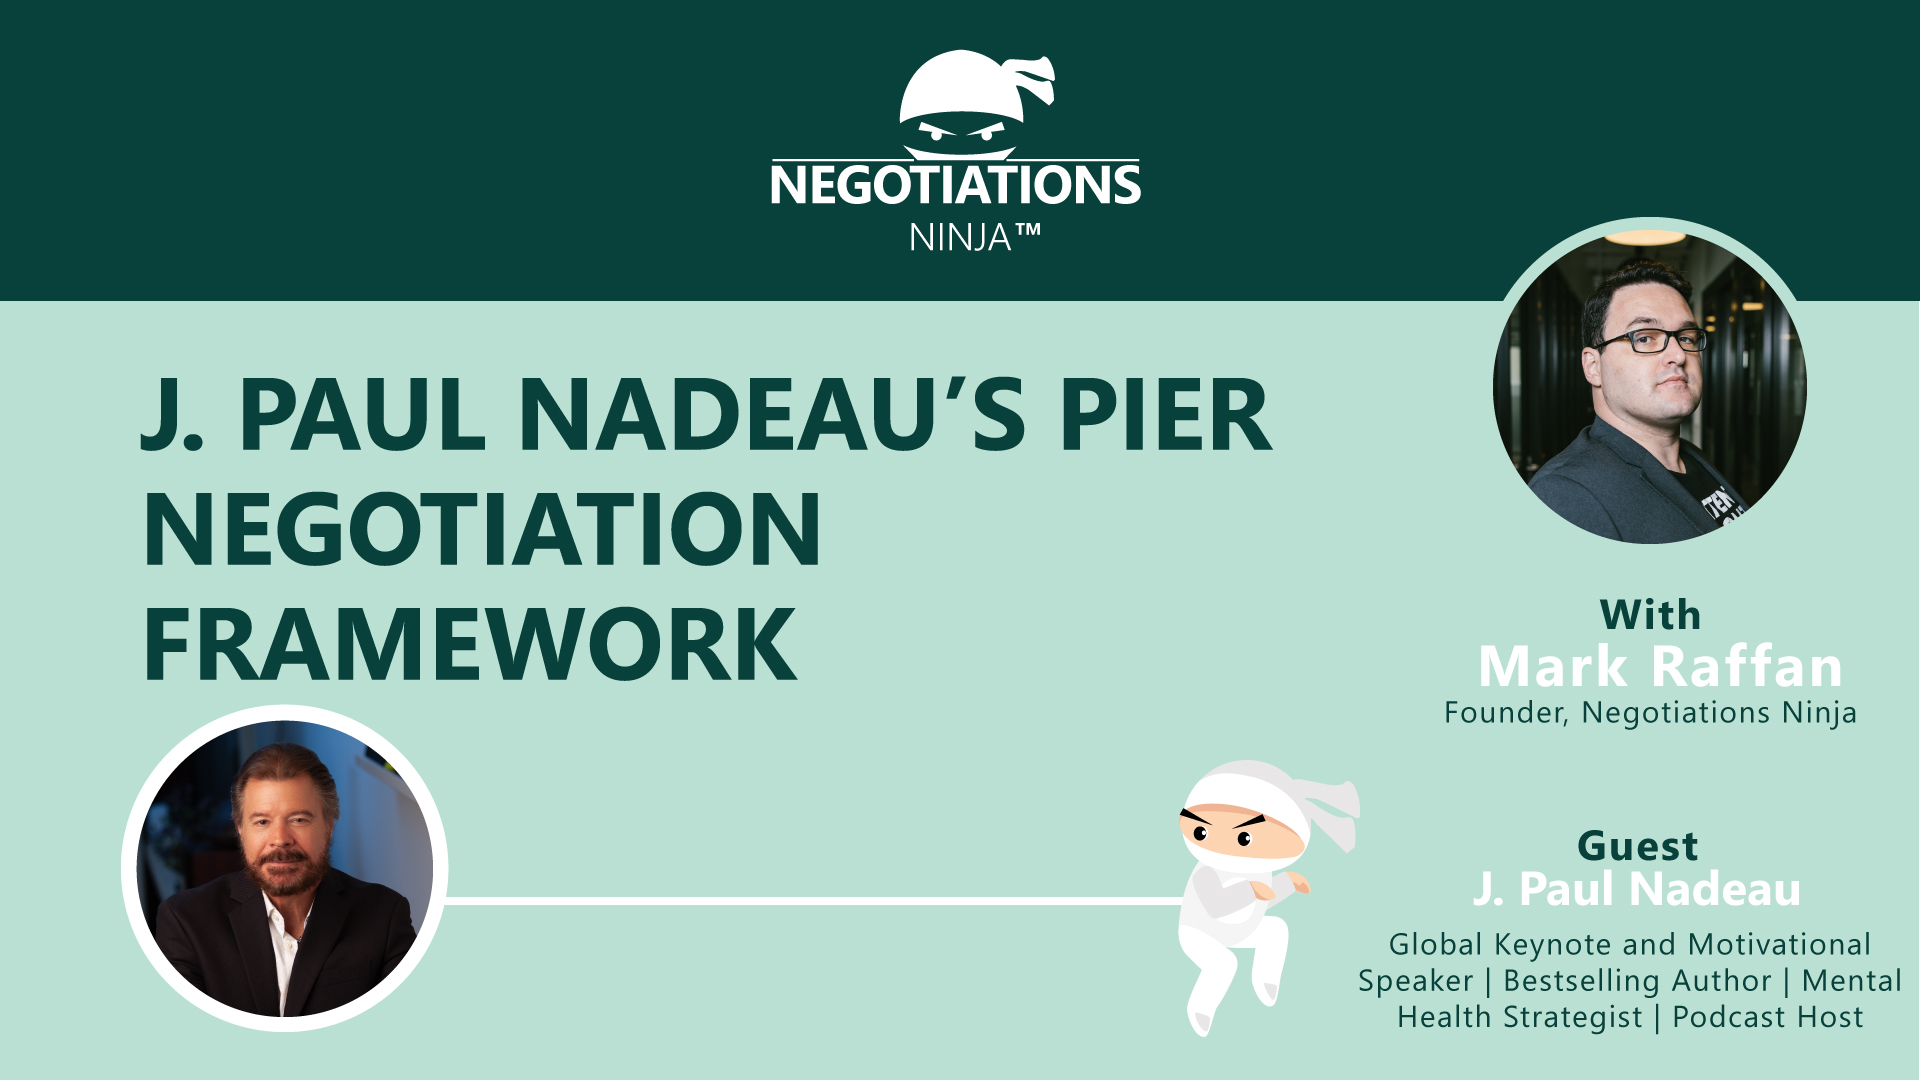 PIER Negotiation Framework